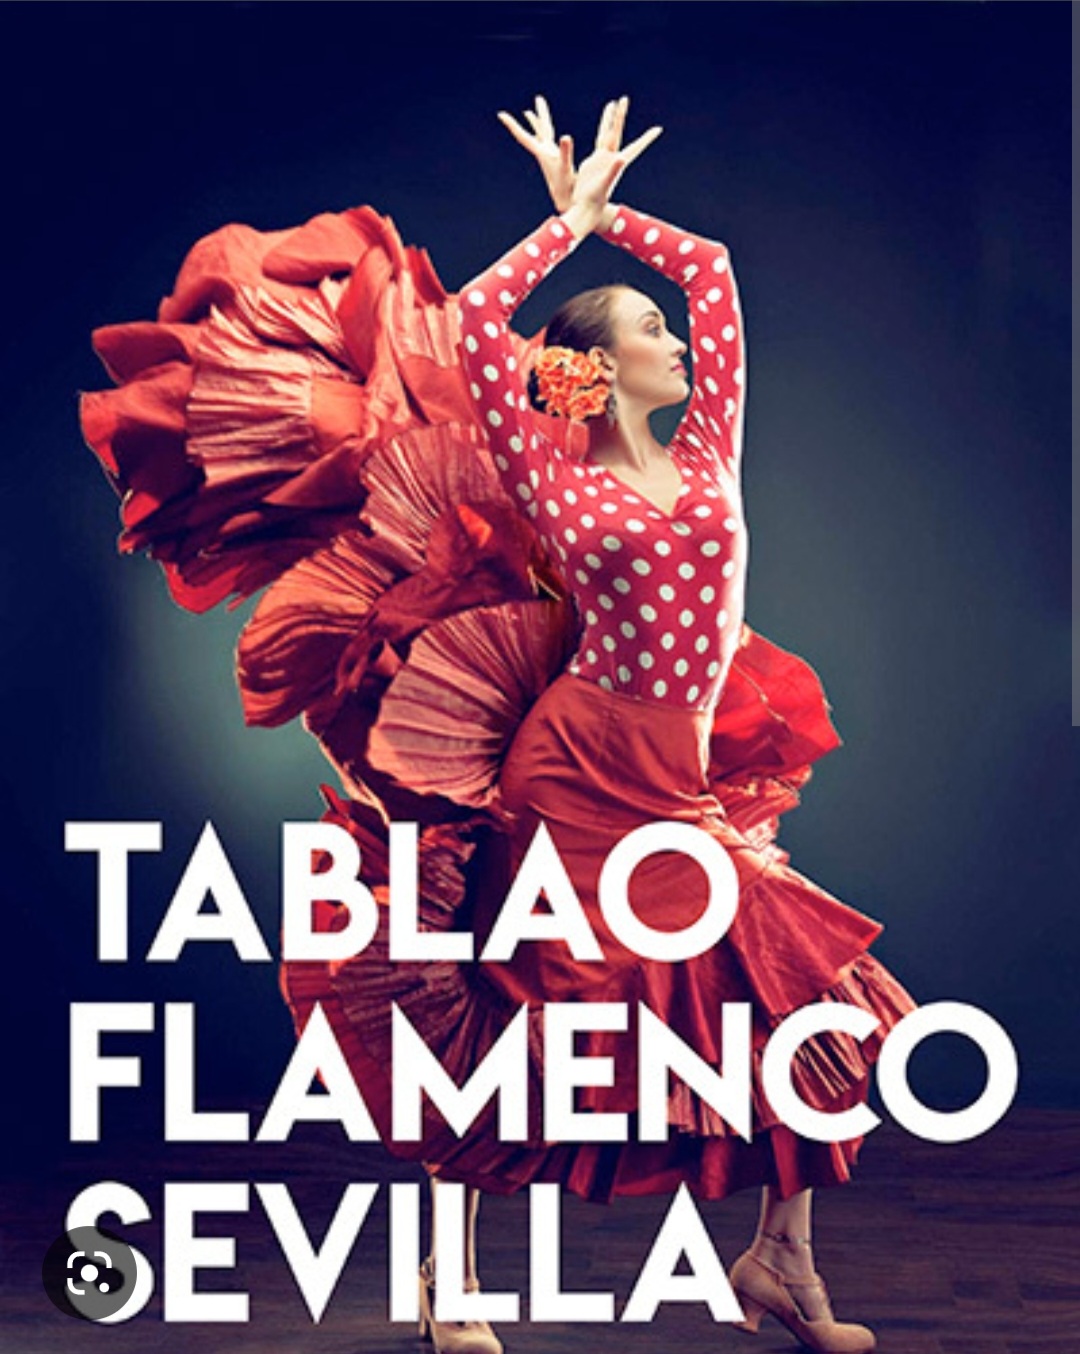 EL Flamenco